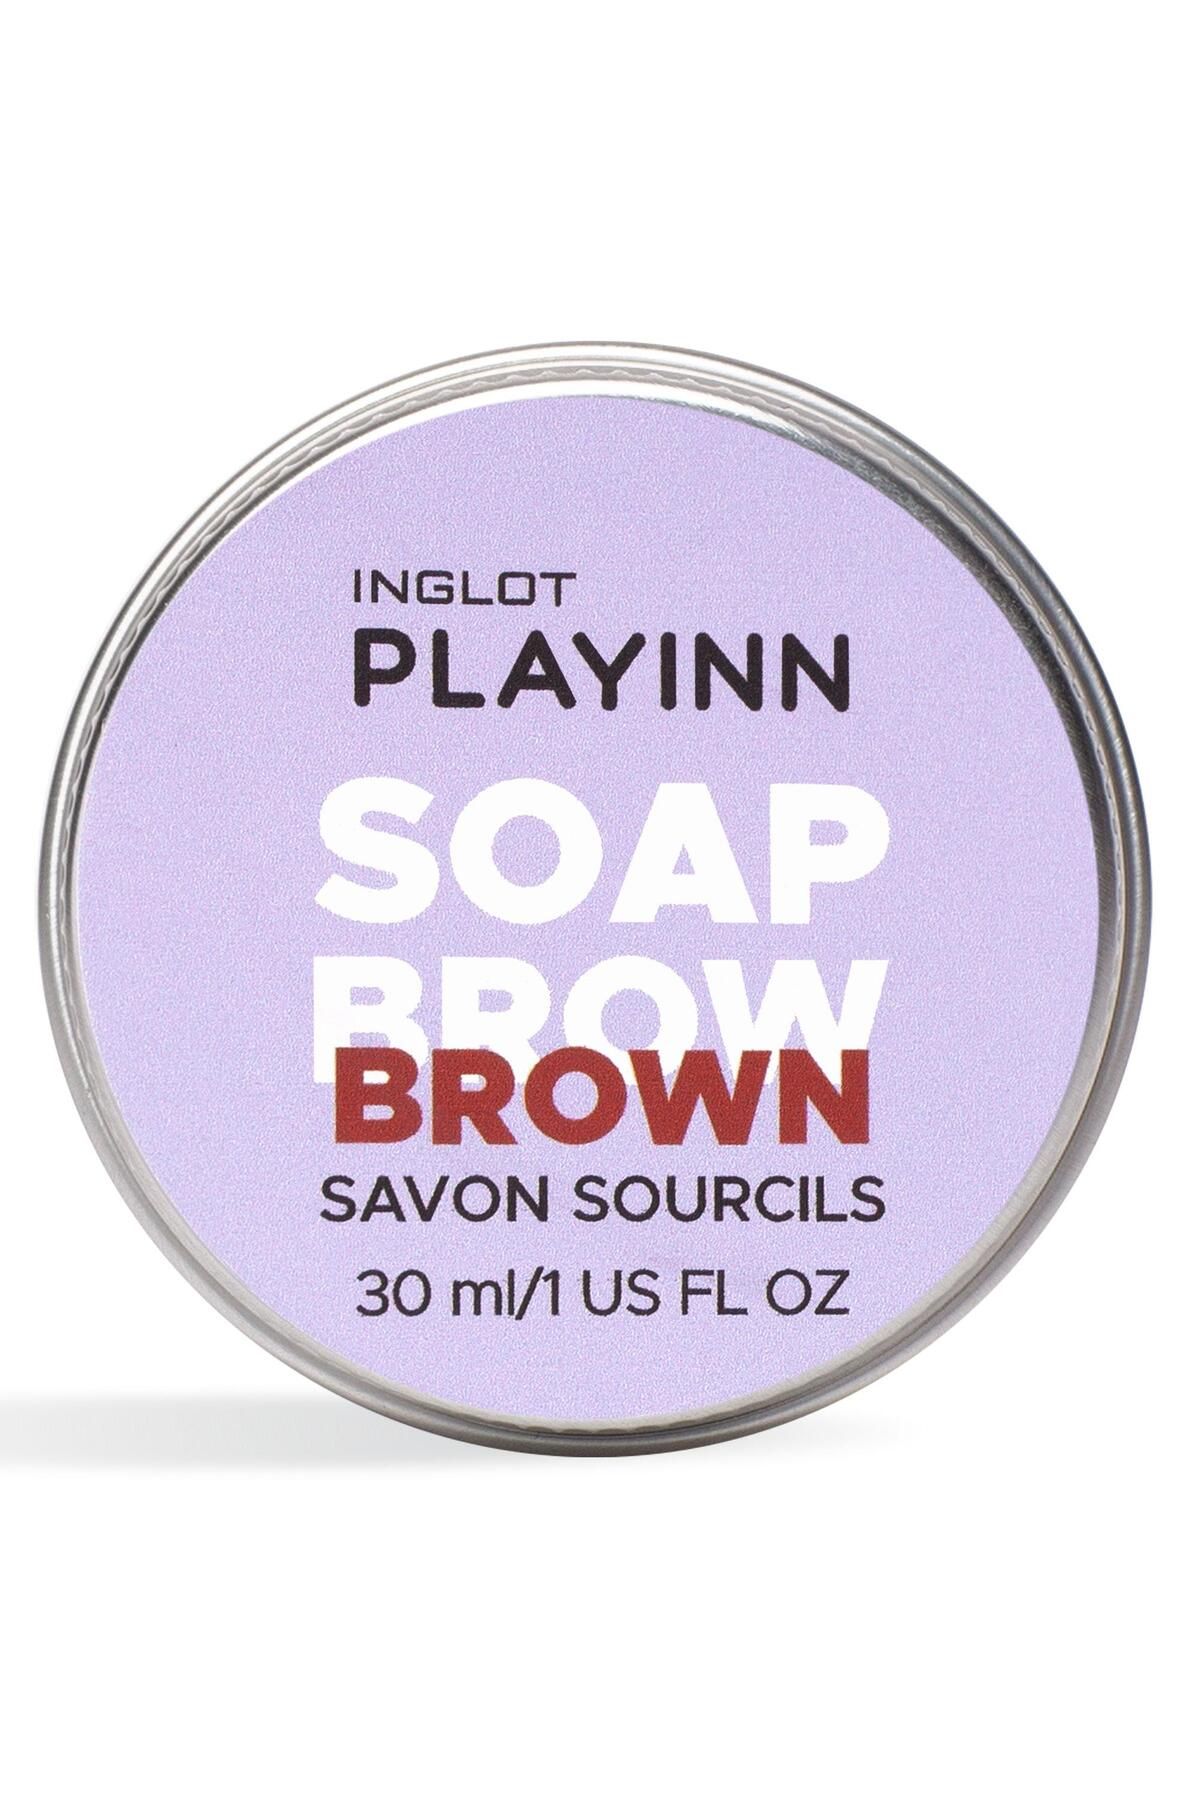 Inglot PLAYINN SOAP BROW BROWN